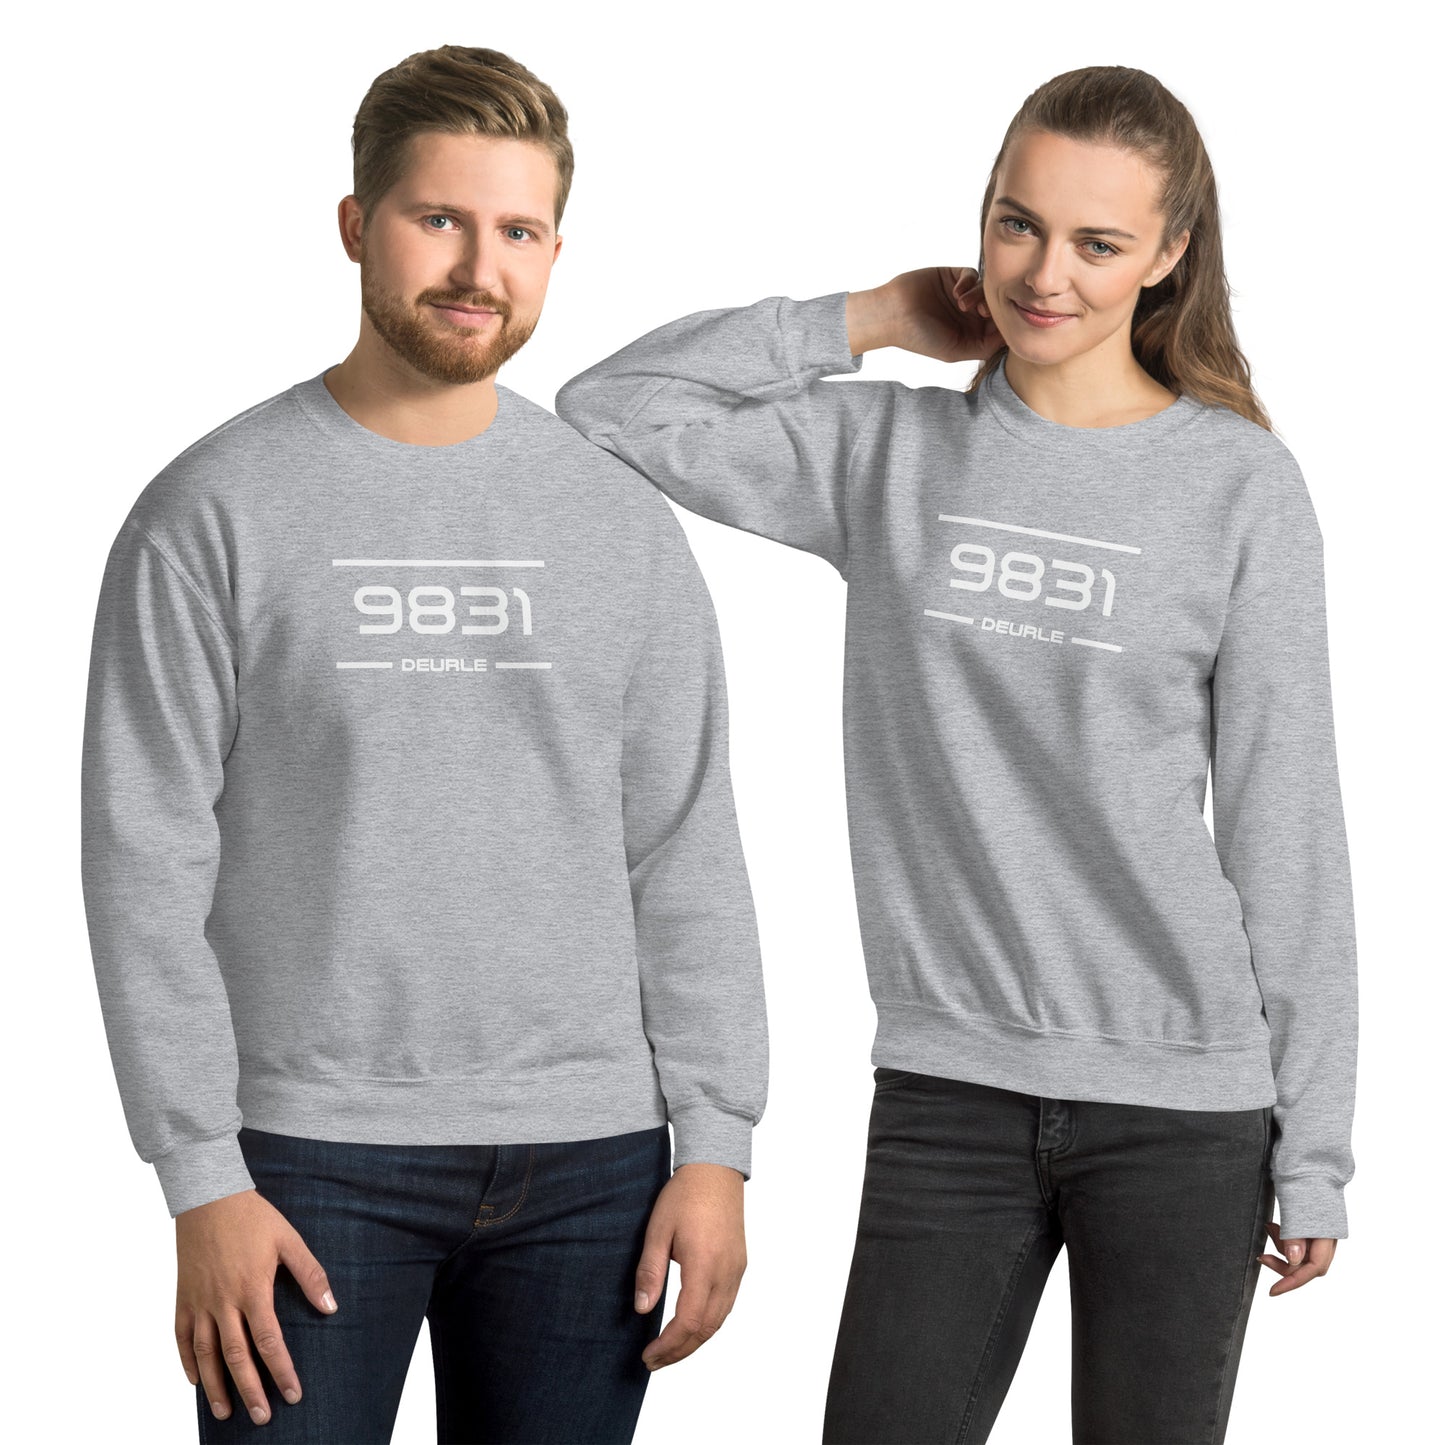 Sweater - 9831 - Deurle (M/V)